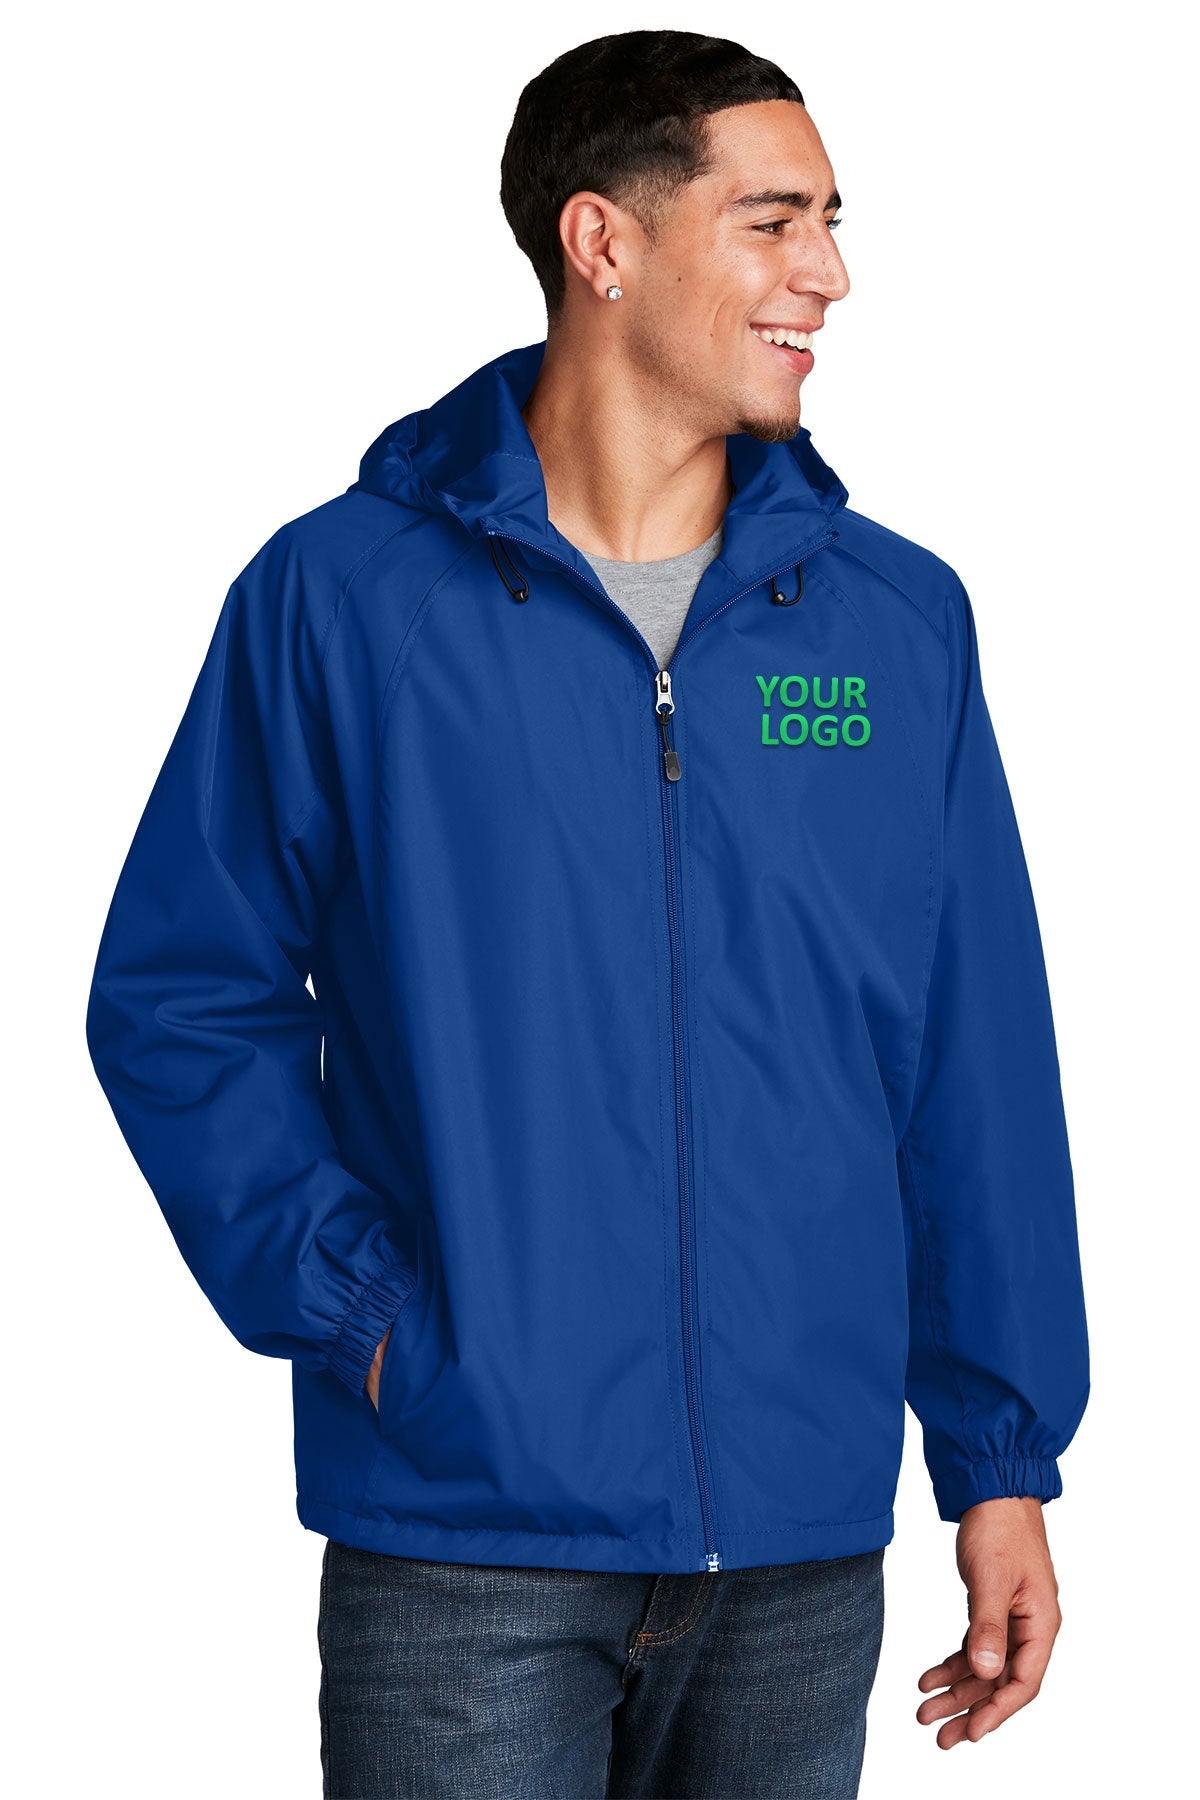 Sport-Tek True Royal JST73 business logo jackets